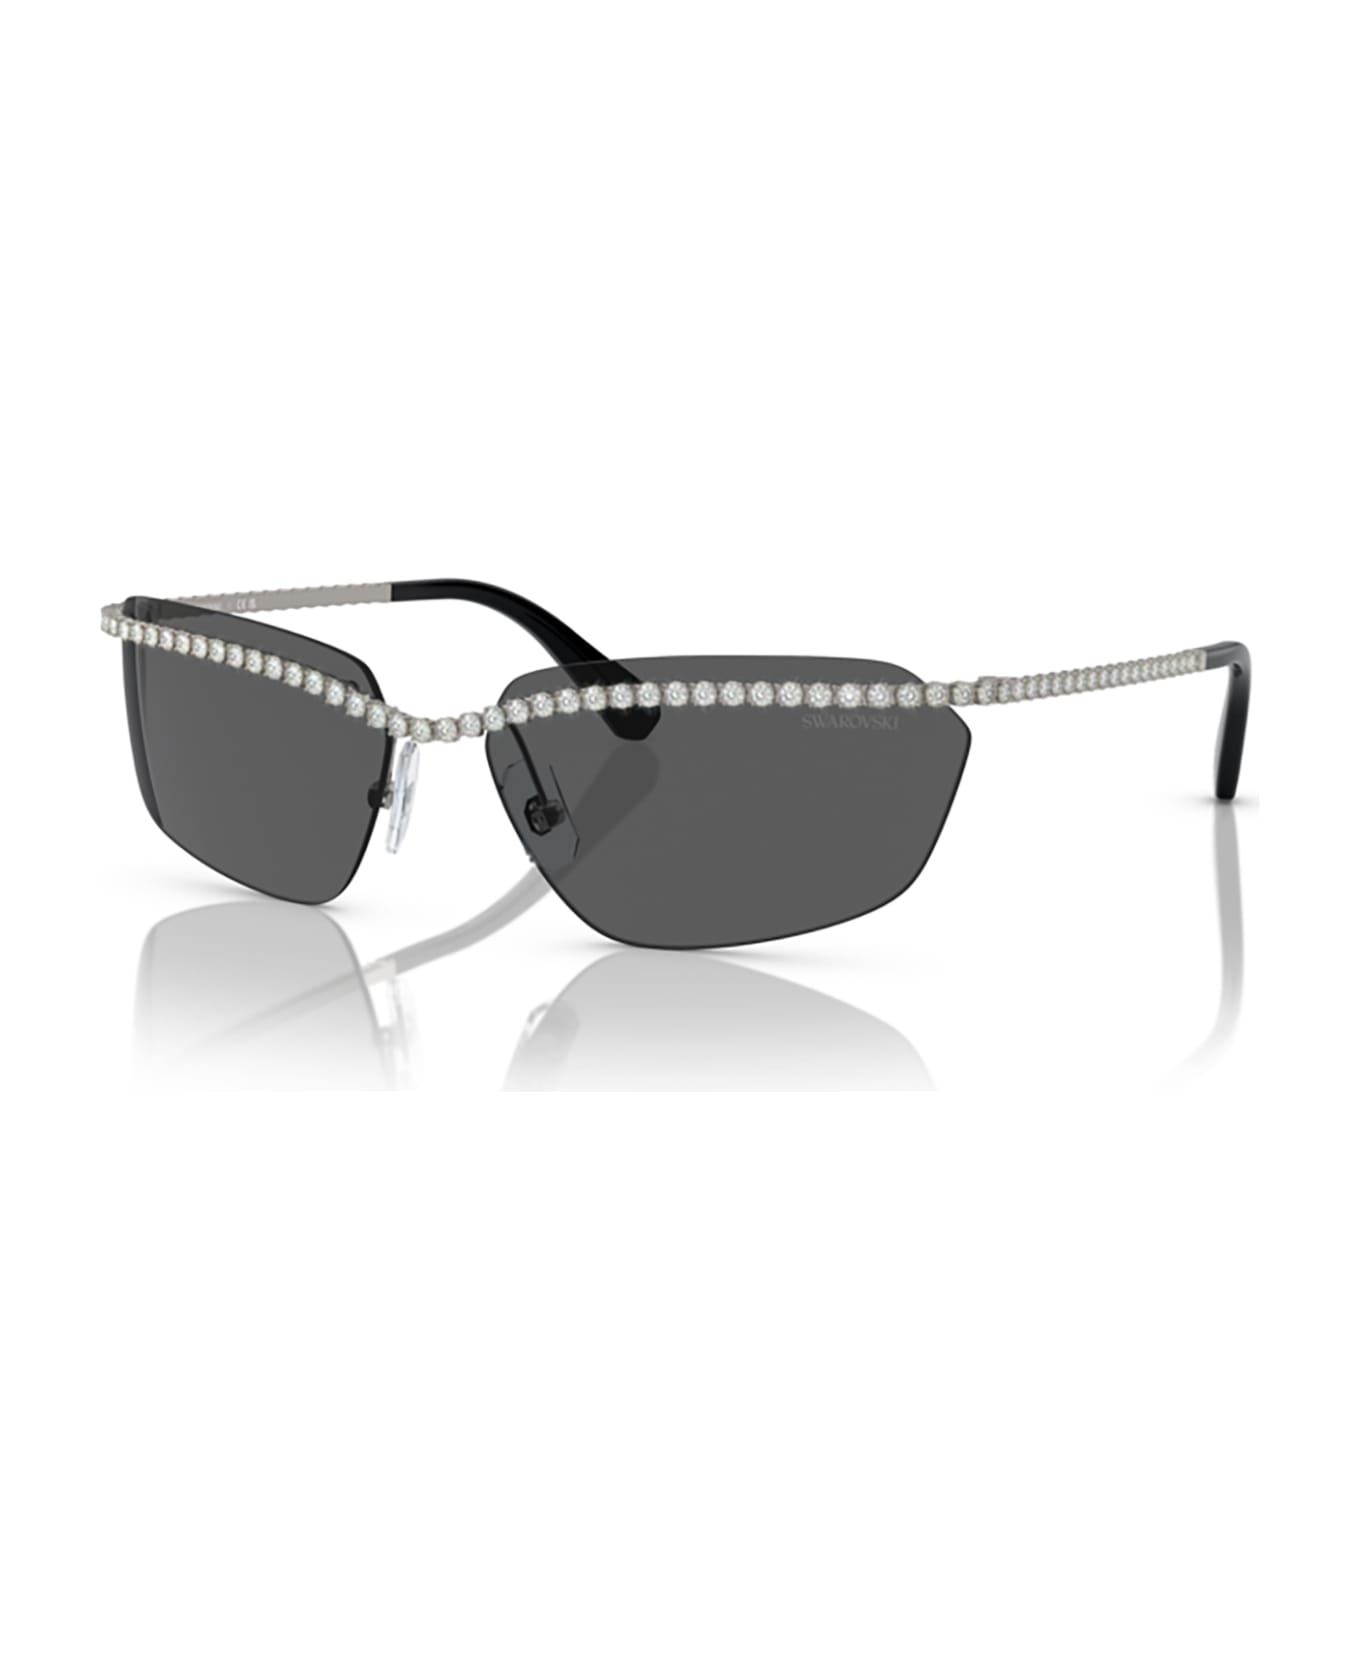 Swarovski Sk7001 Gunmetal Sunglasses - Gunmetal